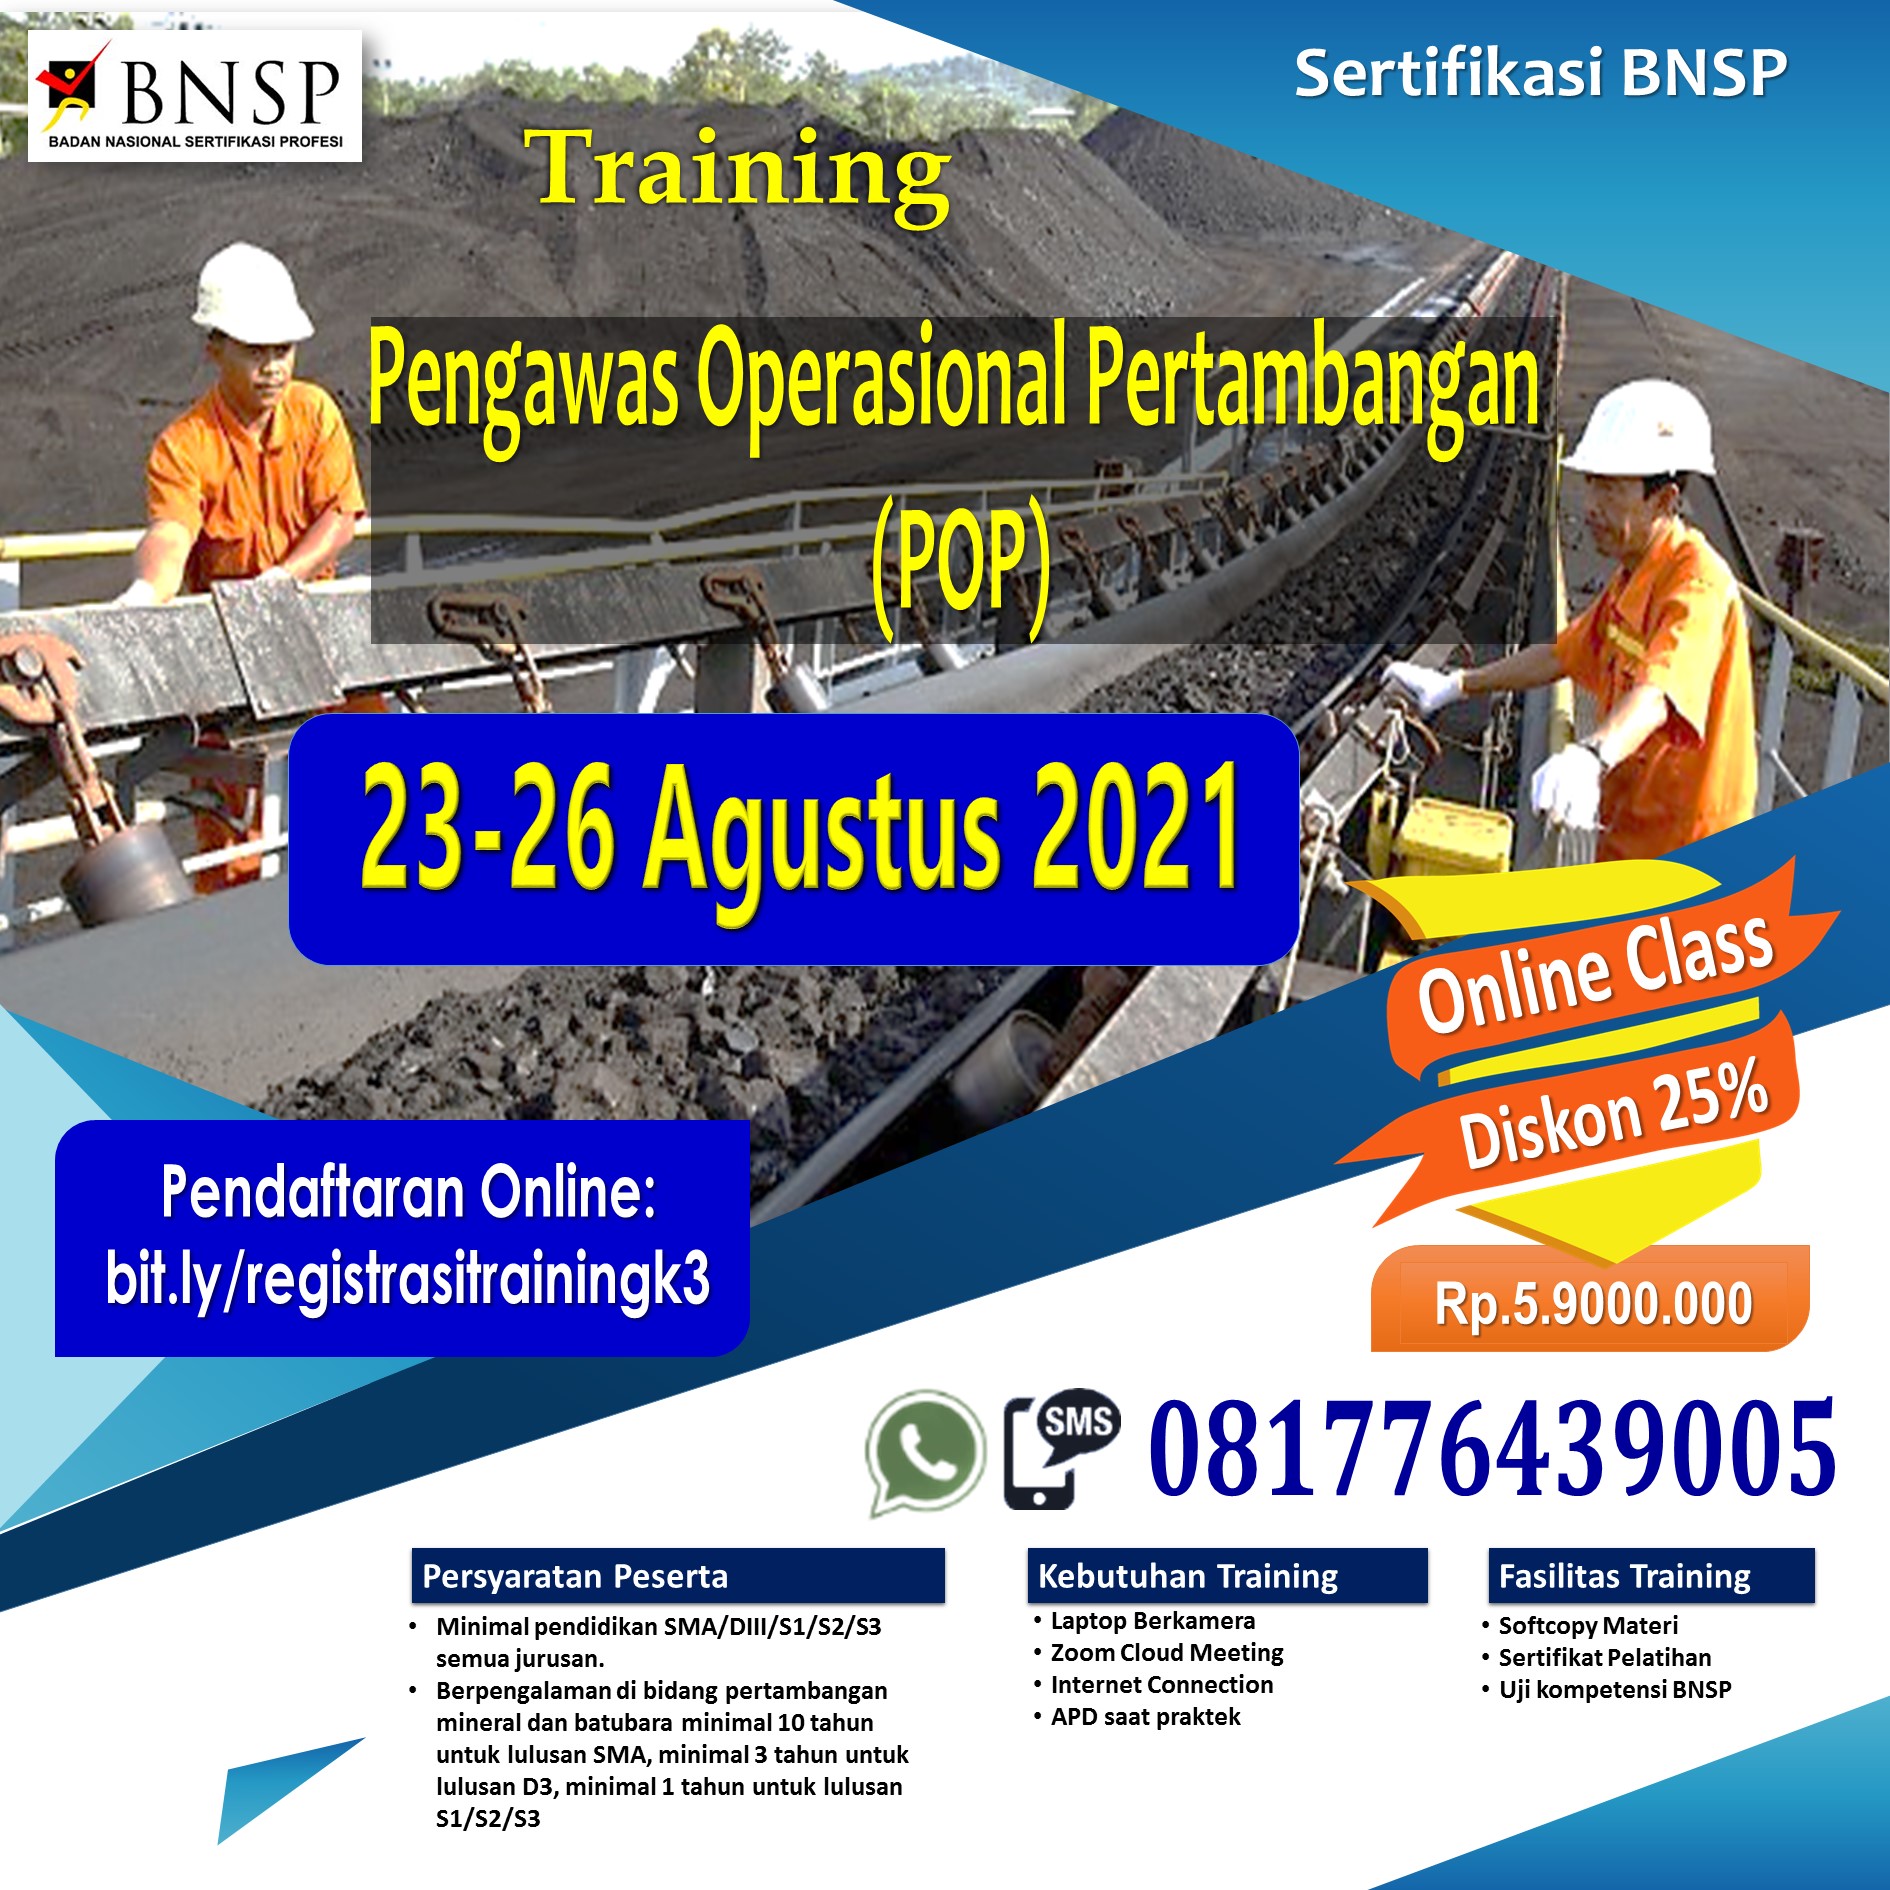 Training-Pengawas-Operasional-Pertama-Pertambangan-POP-tgl-23-26-Agustus-2021